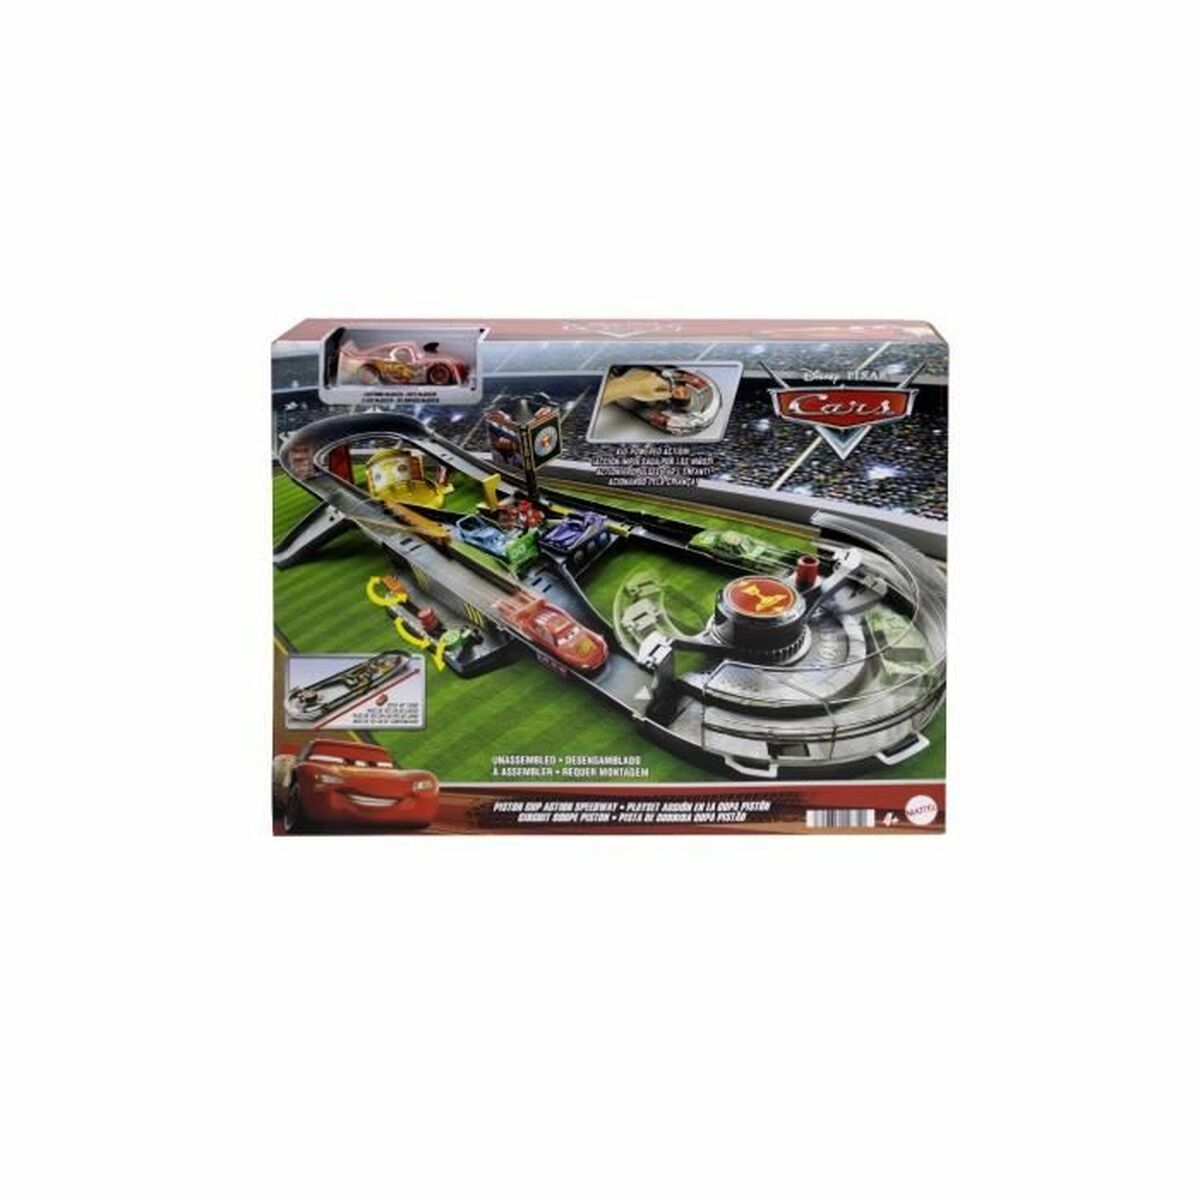 Racetrack Mattel Cars